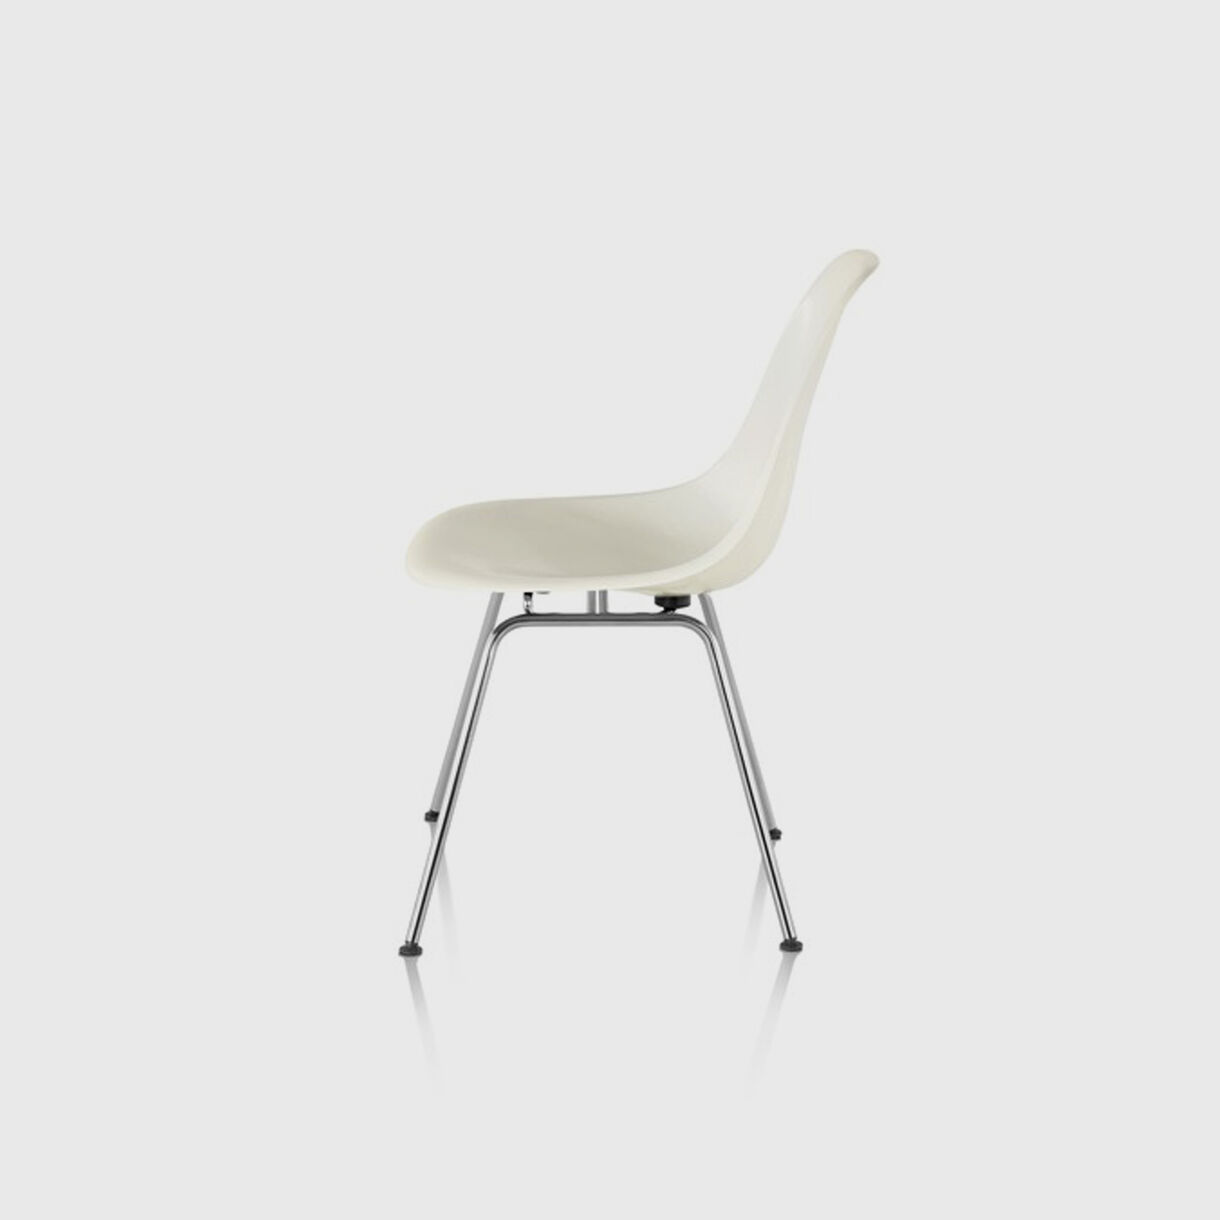 Eames Moulded Plastic Side Chair, 4-Leg, White & Chrome